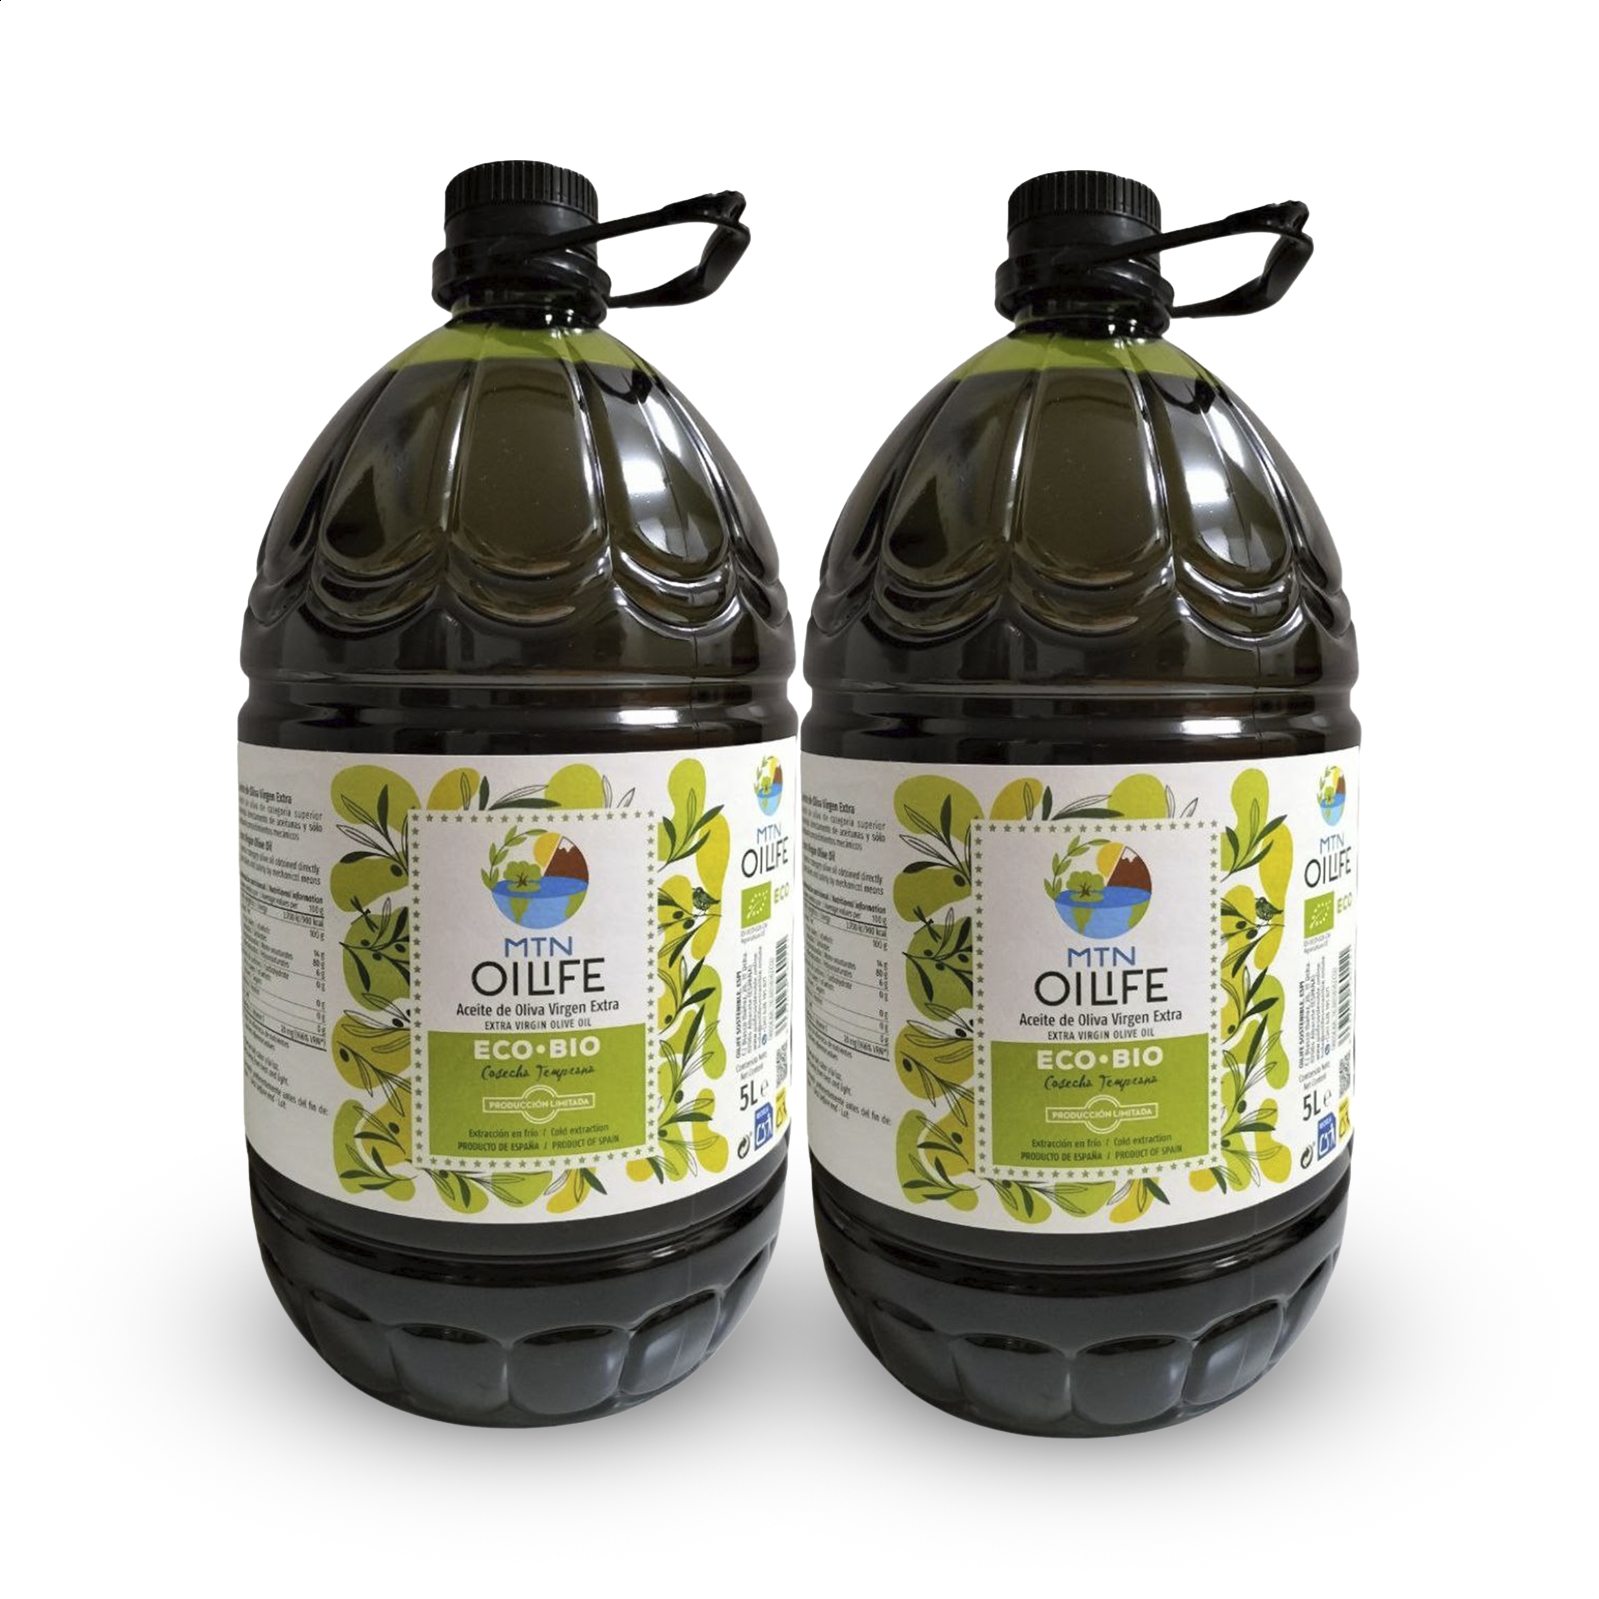 Oilife - AOVE Arbequina ecológico cosecha temprana 5L, 2uds